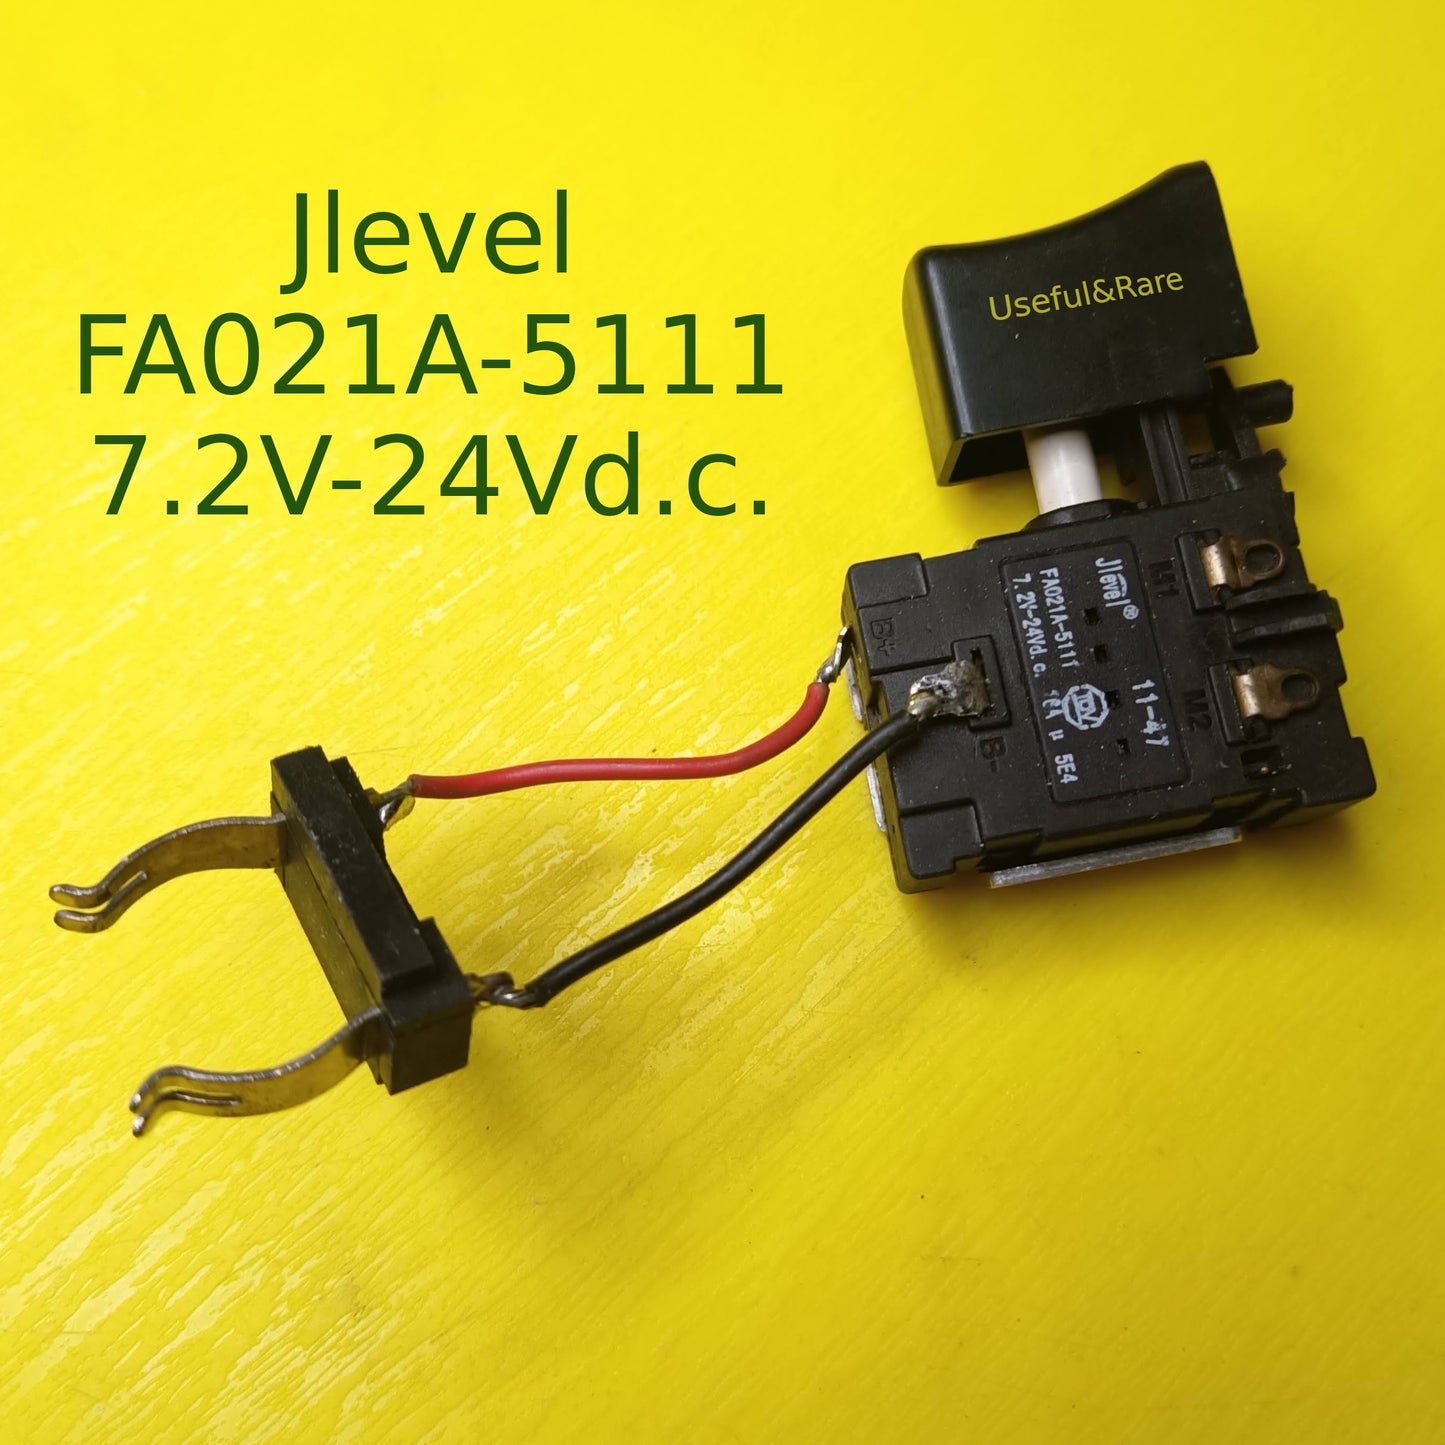 Hitachi, Parkside screwdriver manual operation trigger switch FA8-16/1 (KLO1) (15*27)